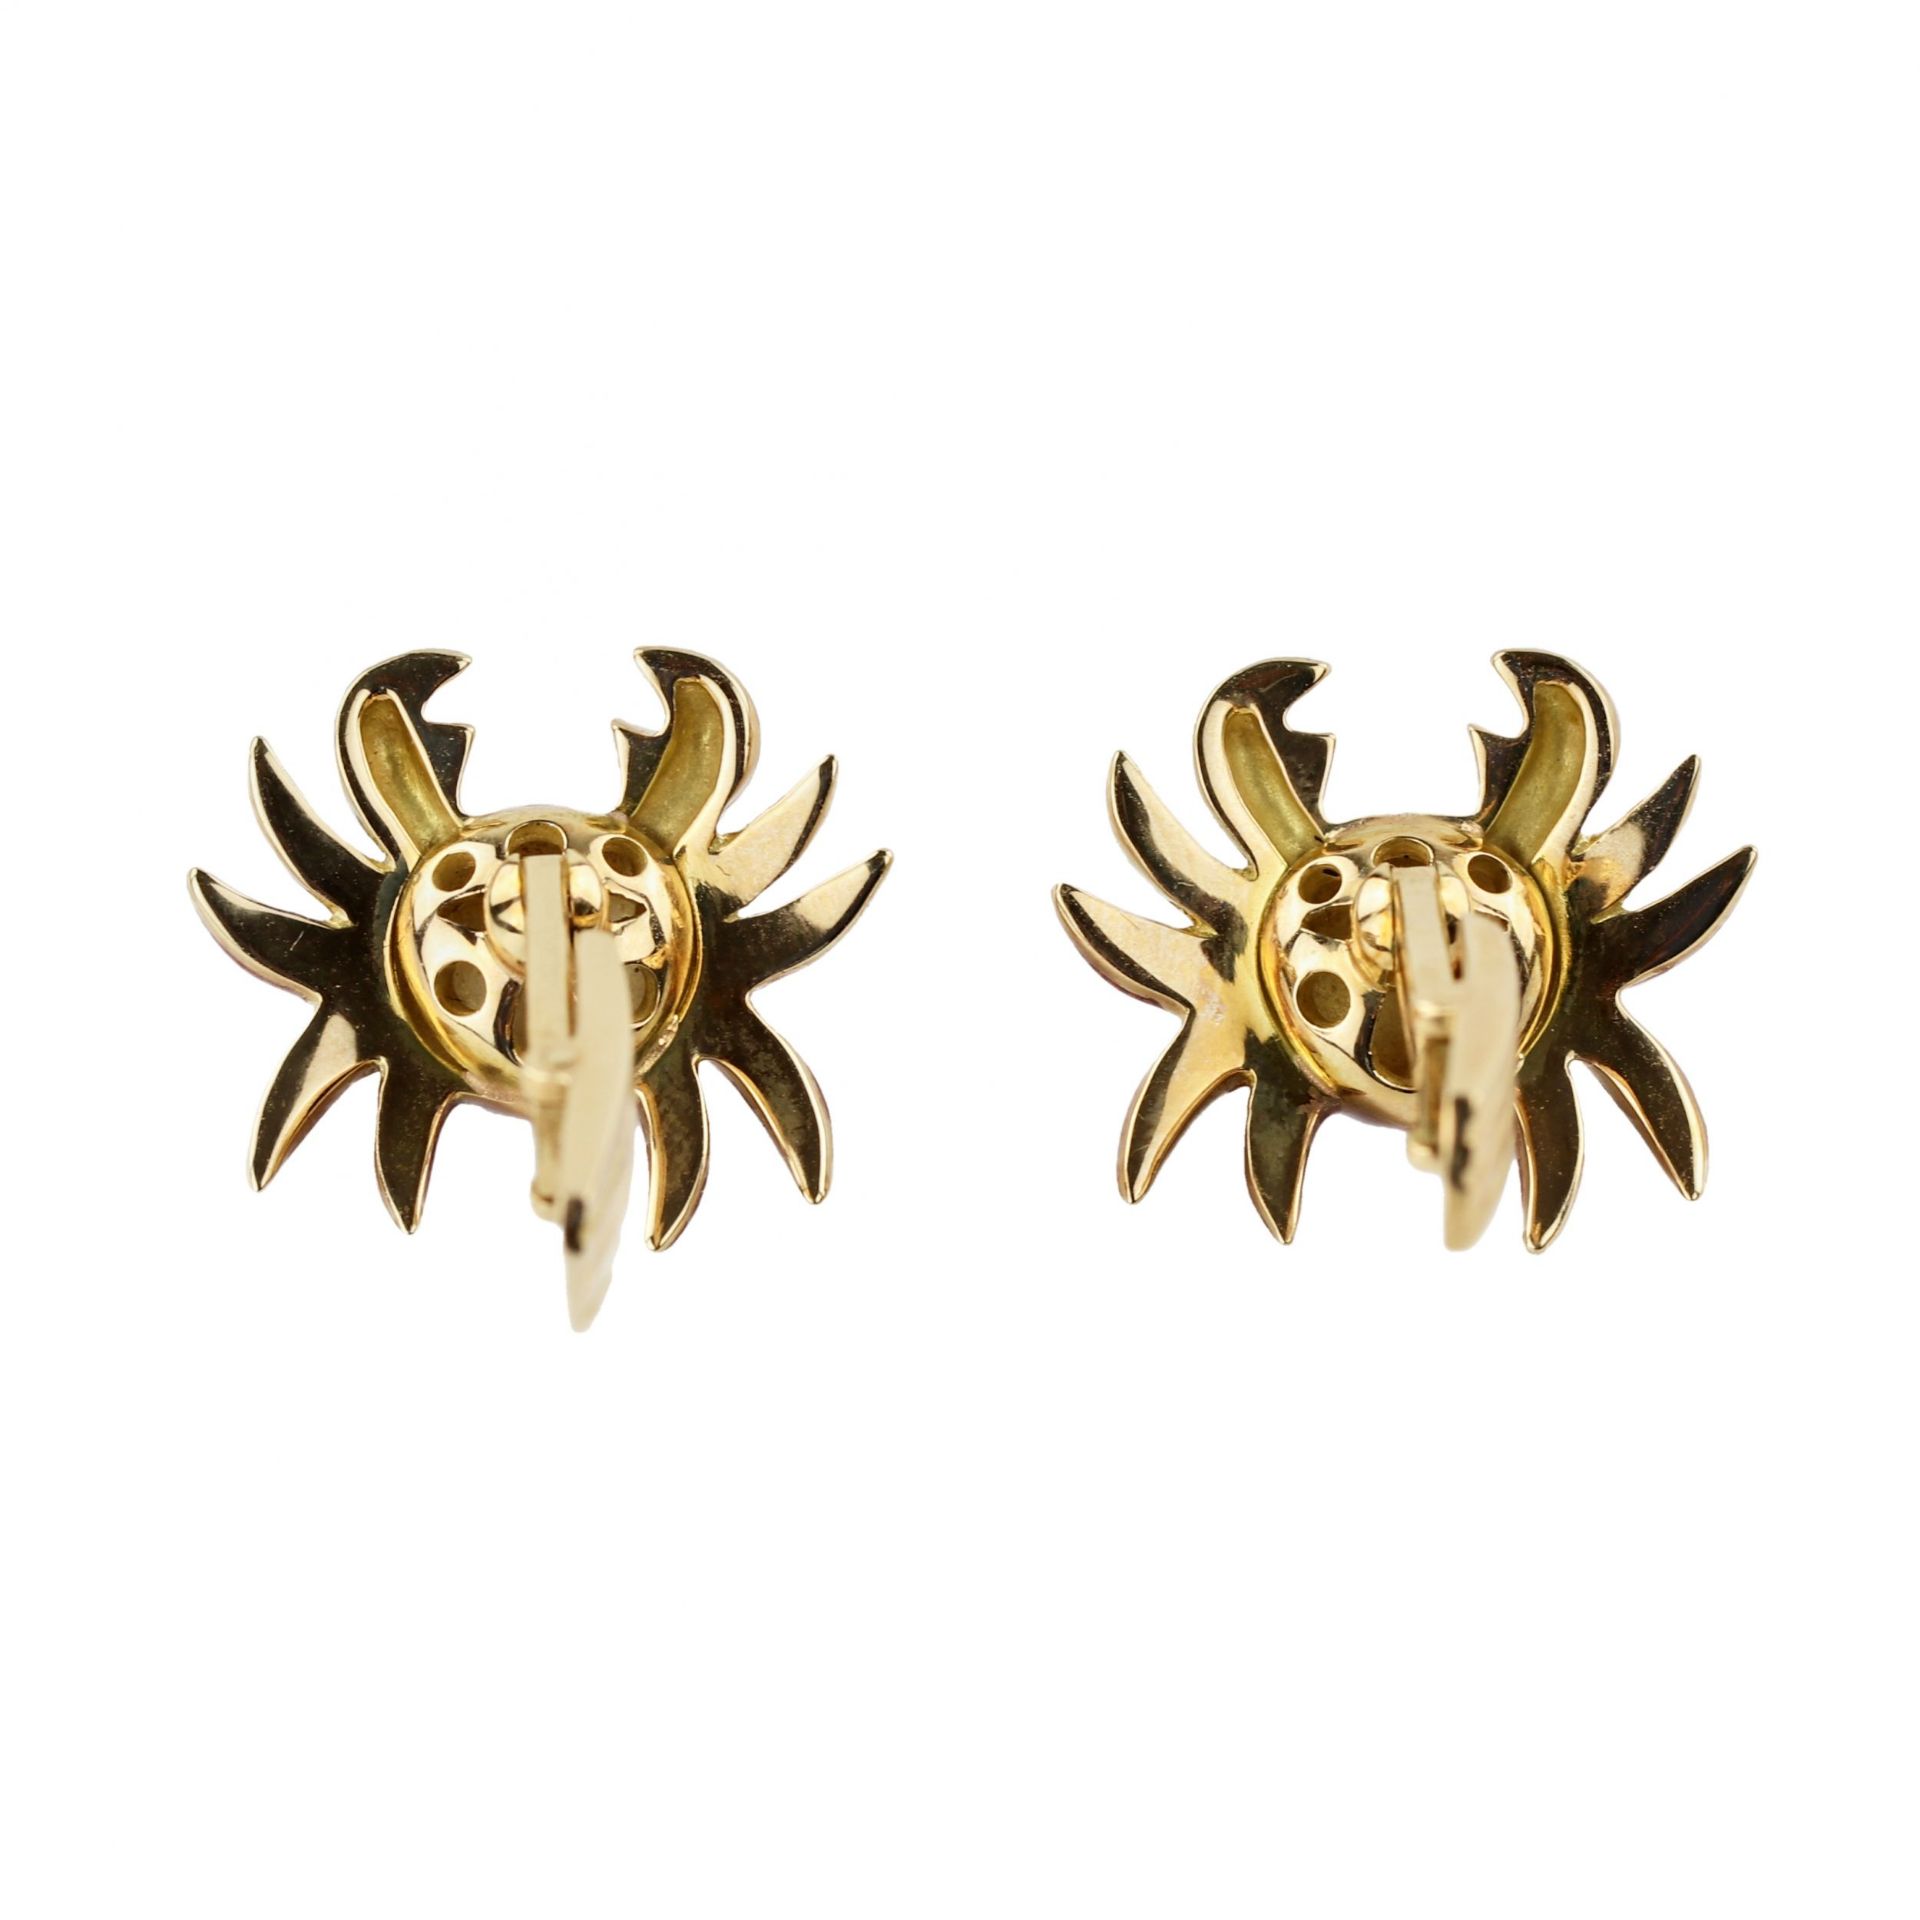 Gold cufflinks with enamel Italian work Crabs. - Image 6 of 6